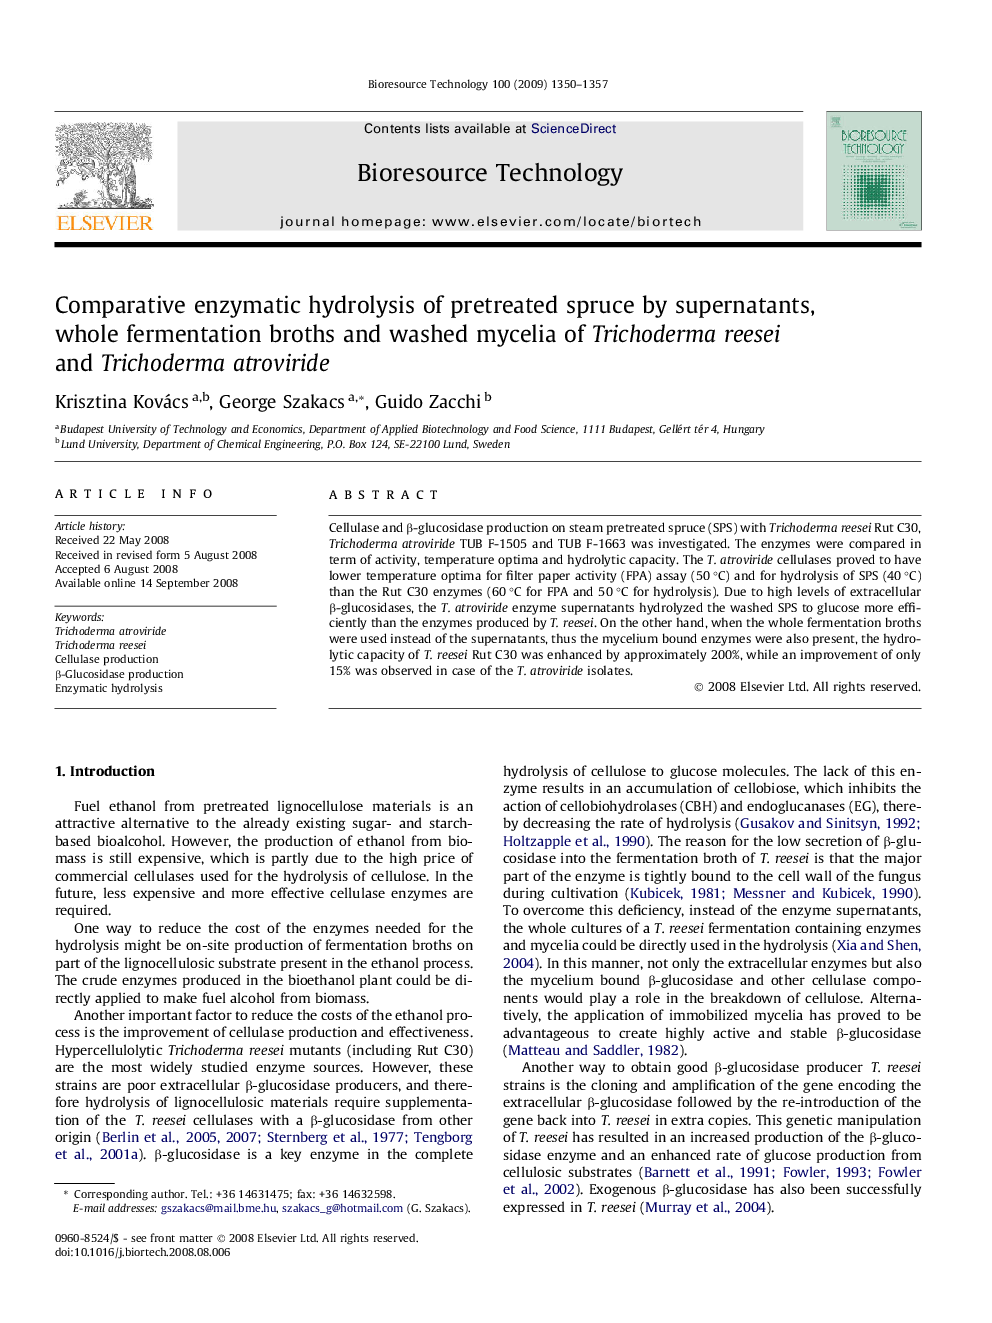 Comparative enzymatic hydrolysis of pretreated spruce by supernatants, whole fermentation broths and washed mycelia of Trichoderma reesei and Trichoderma atroviride